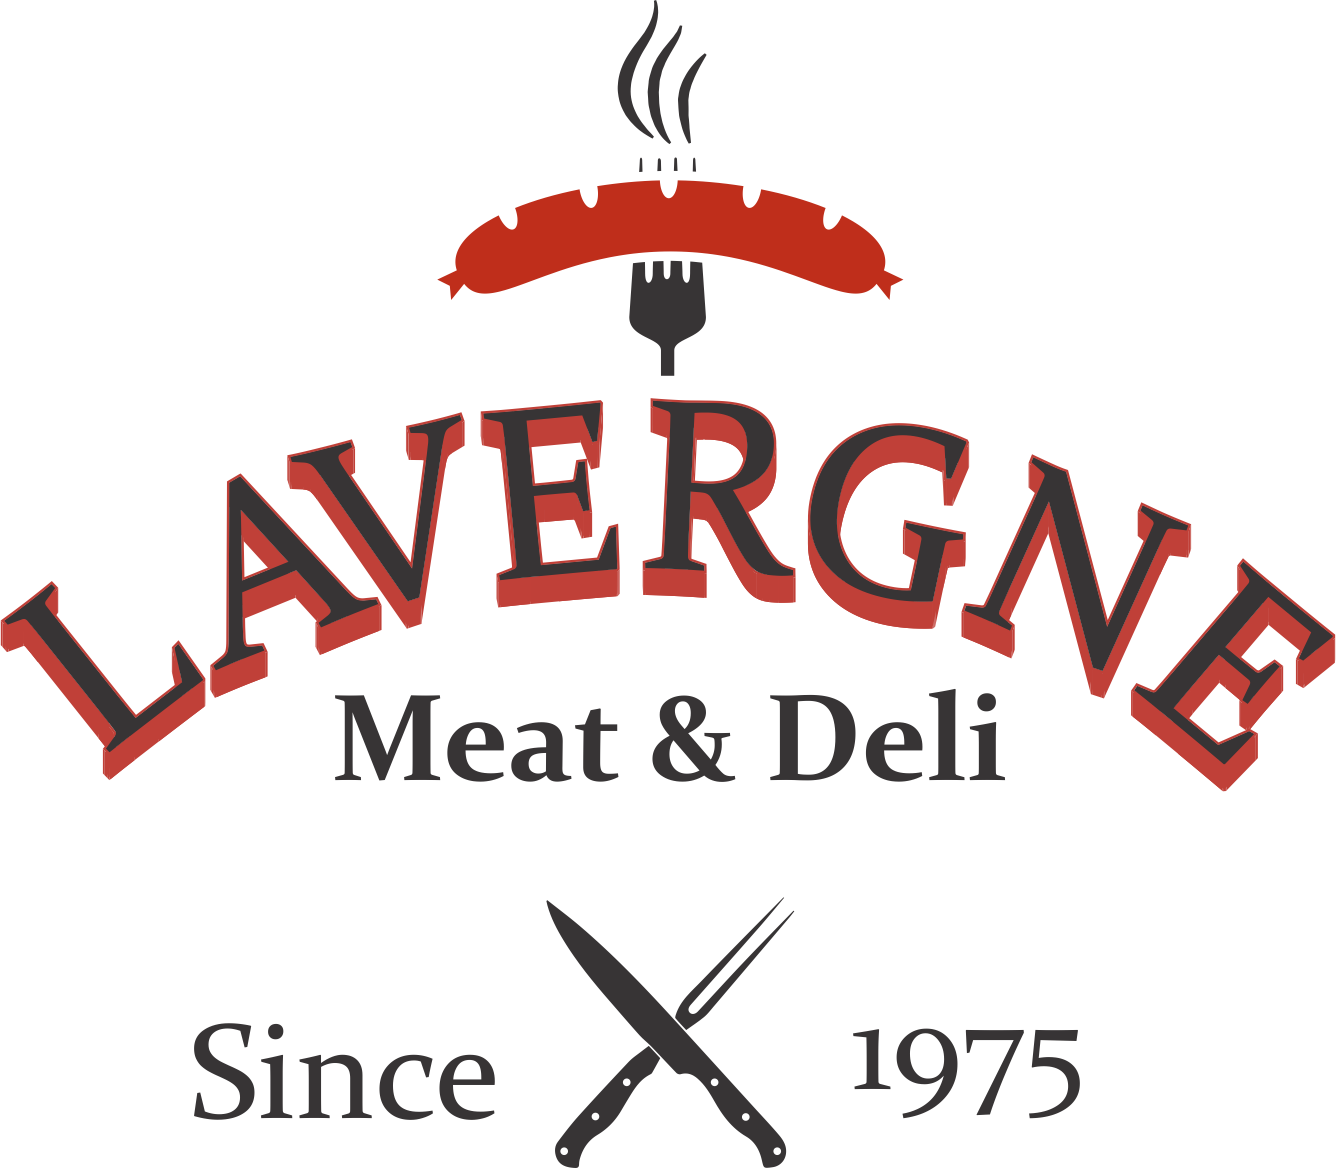 Lavergne Meat & Deli